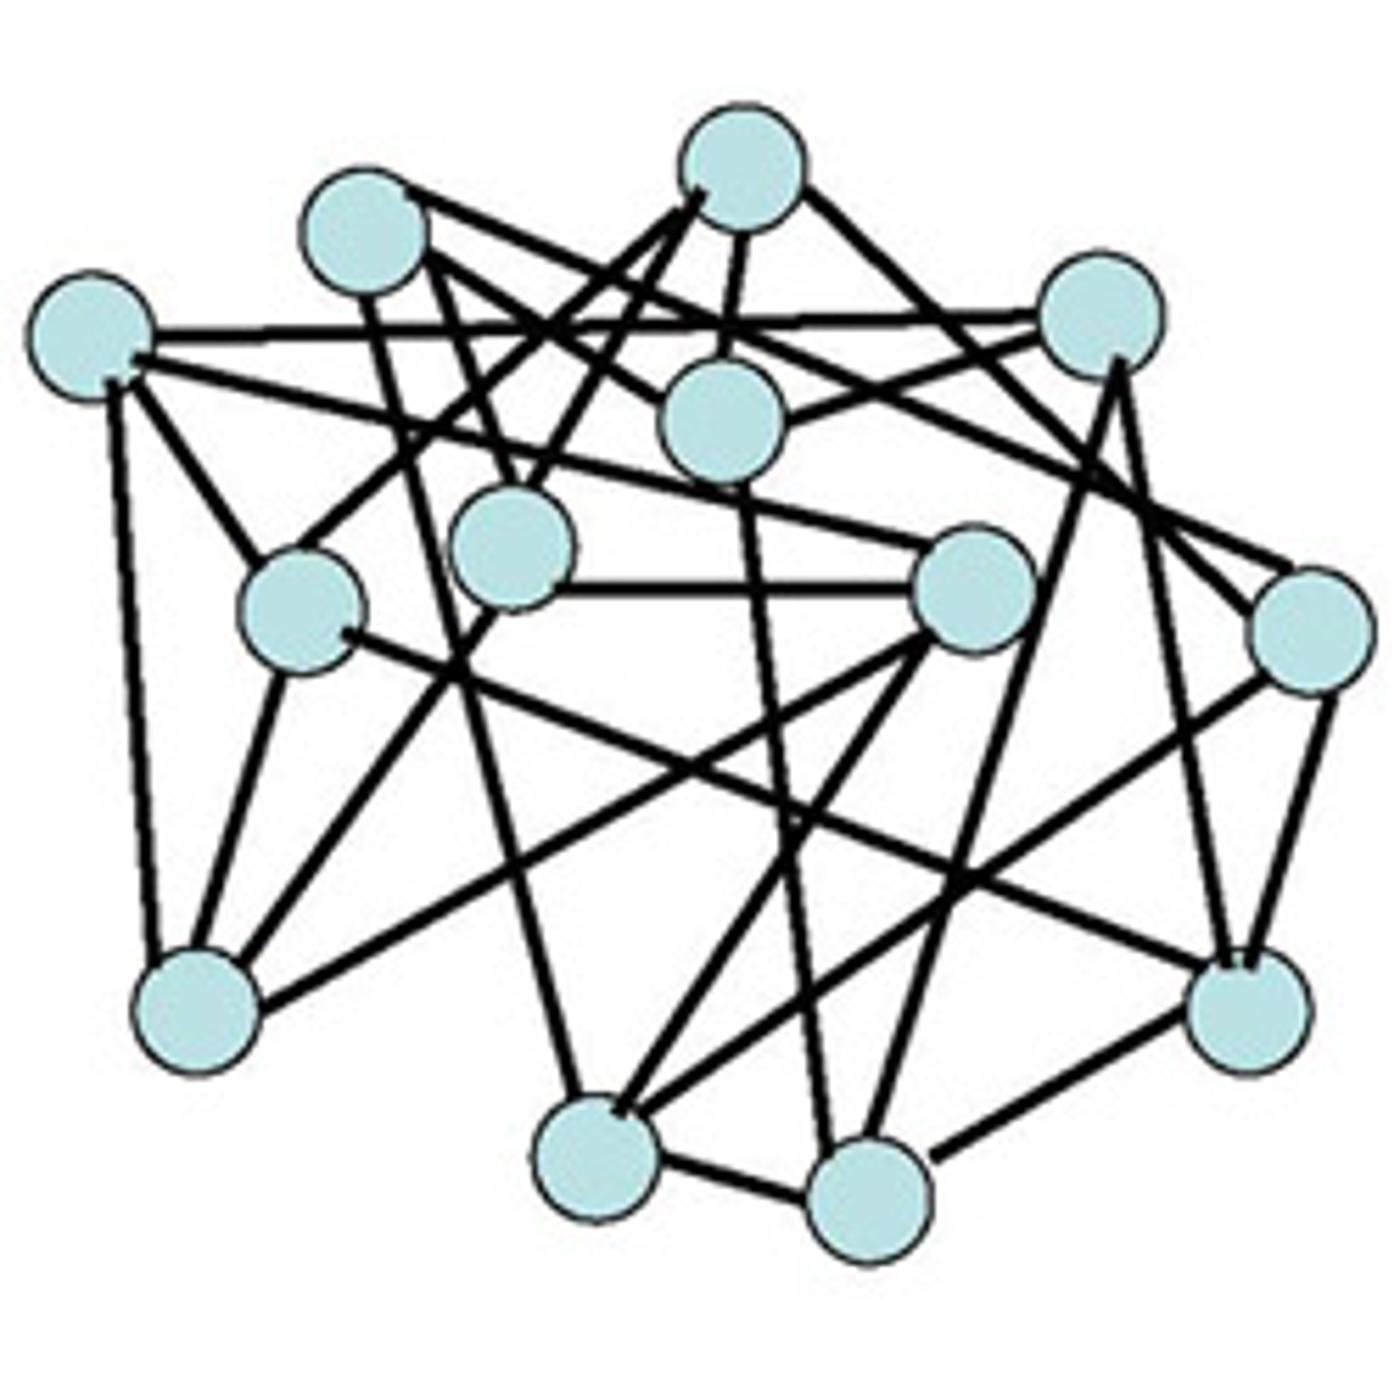 Edge-reinforced random walk on a two-dimensional graph